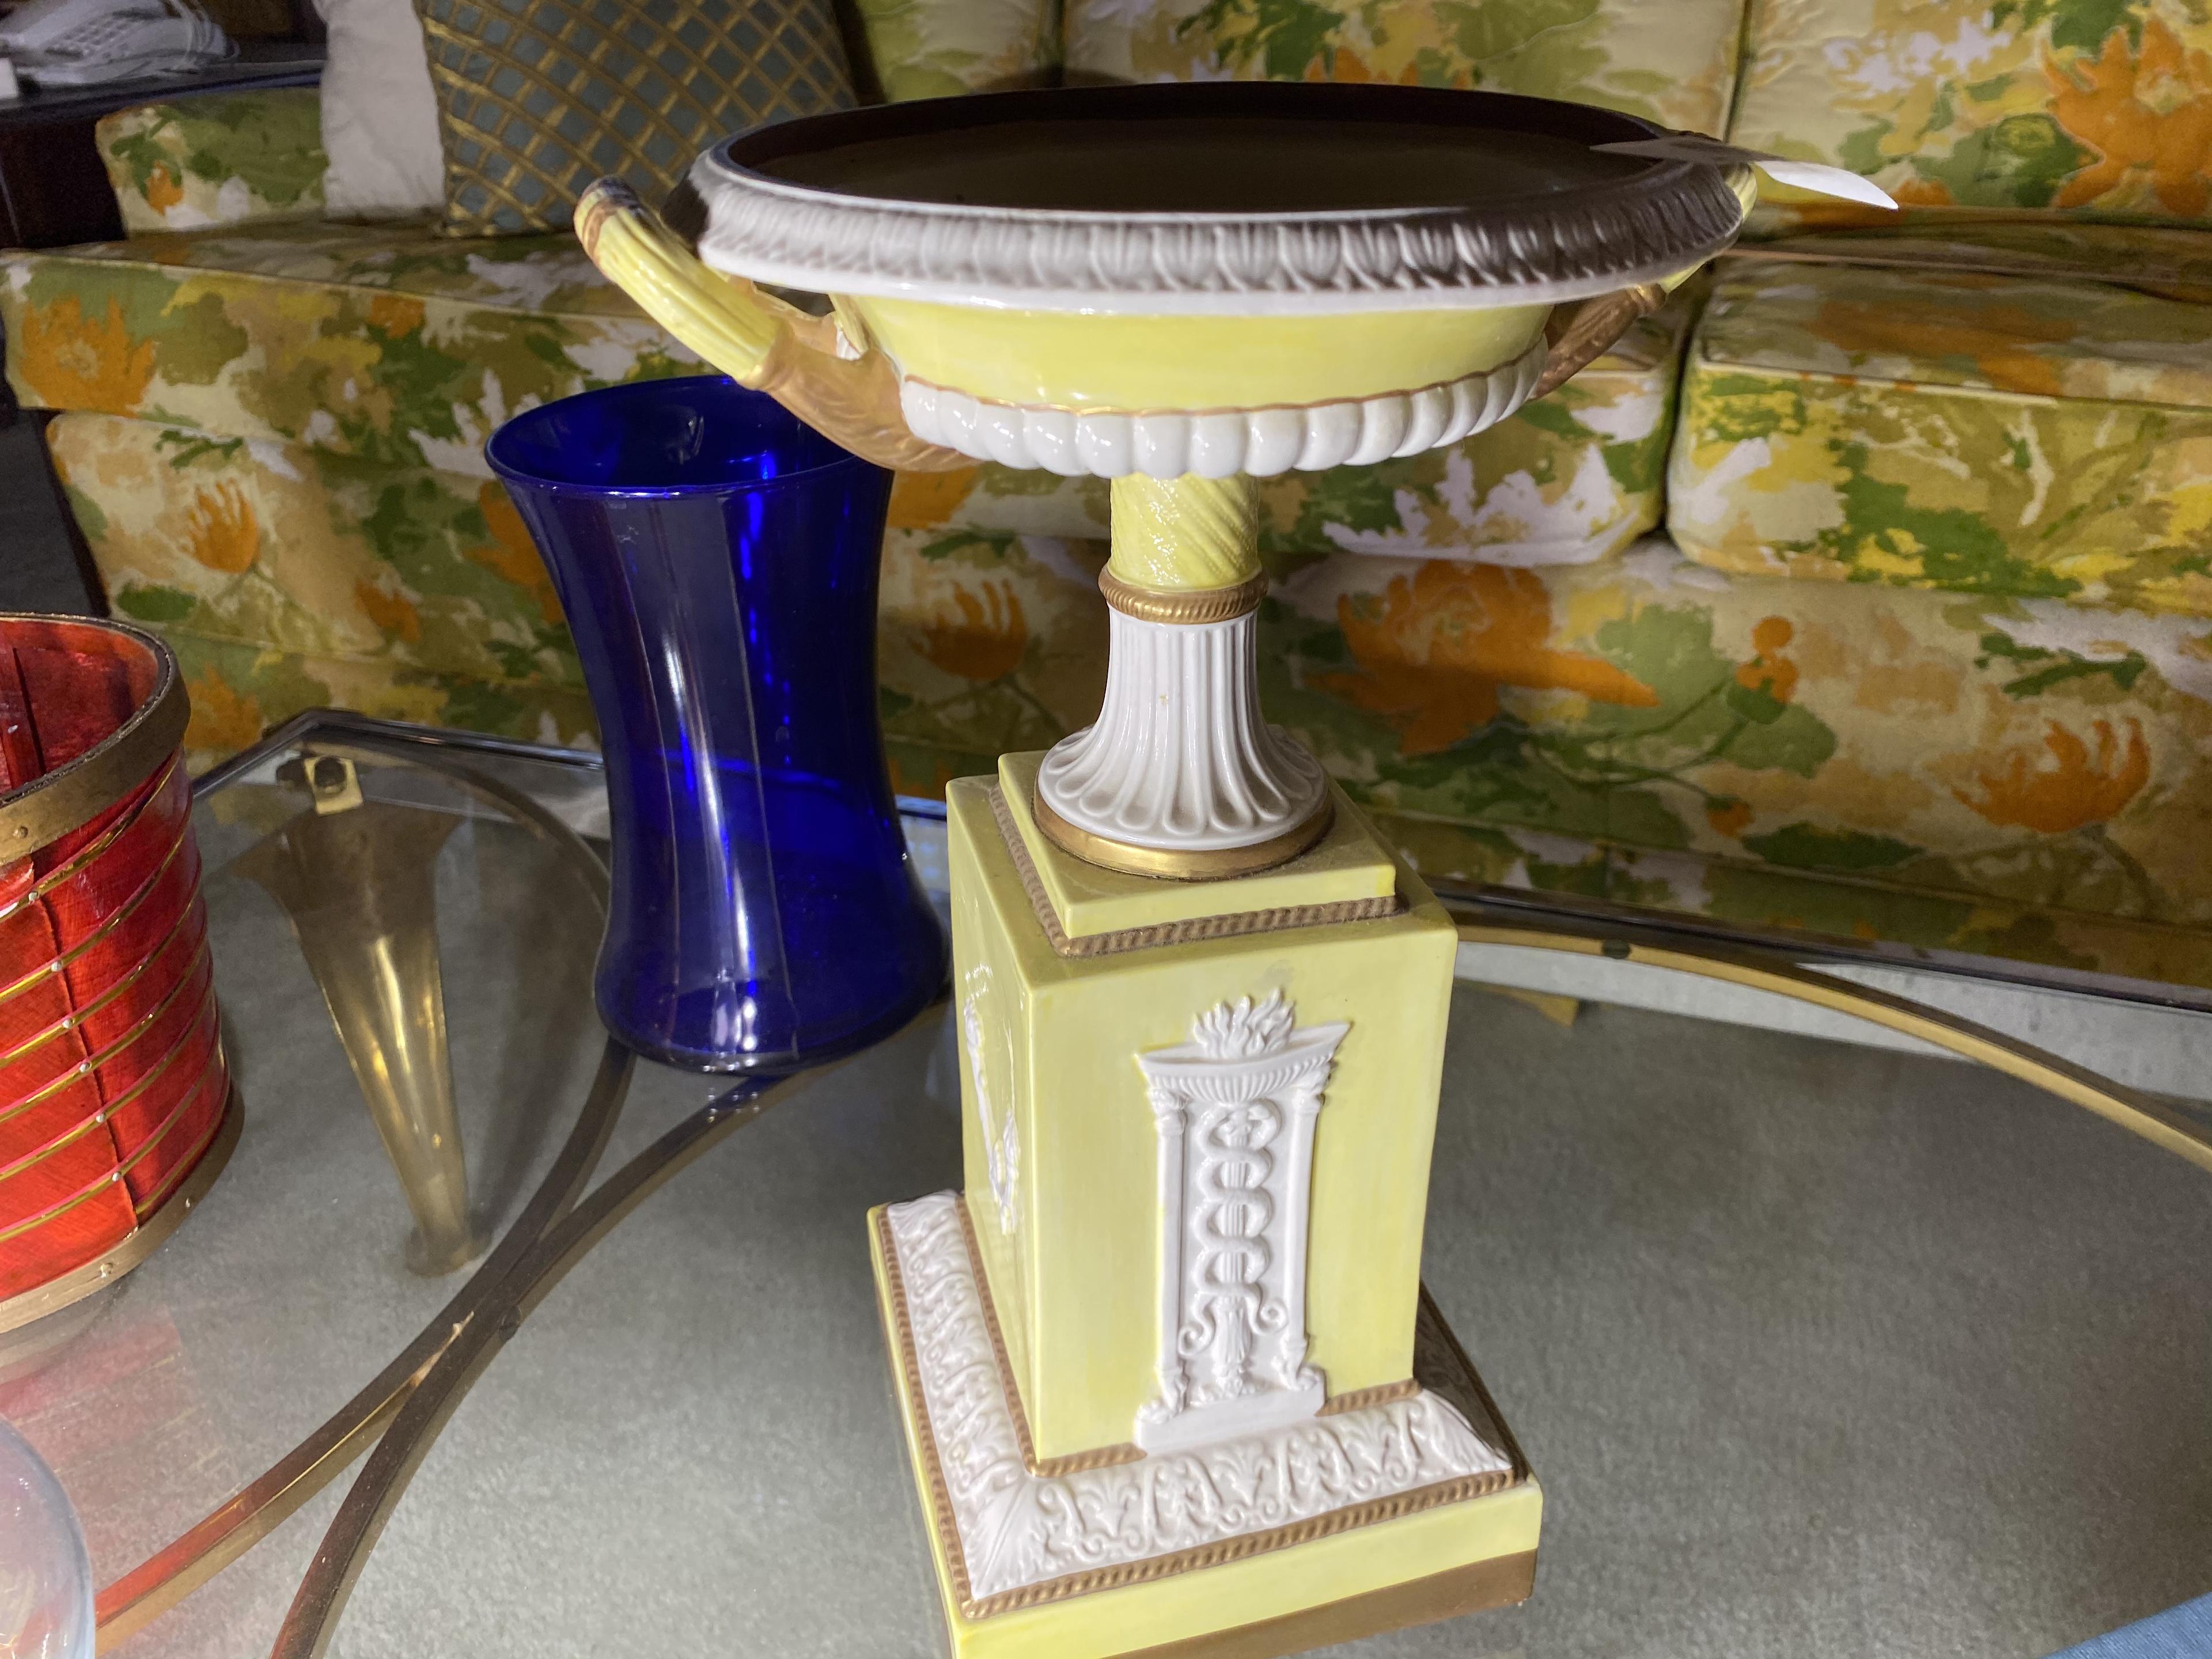 Items on table including Italian ceramic urn